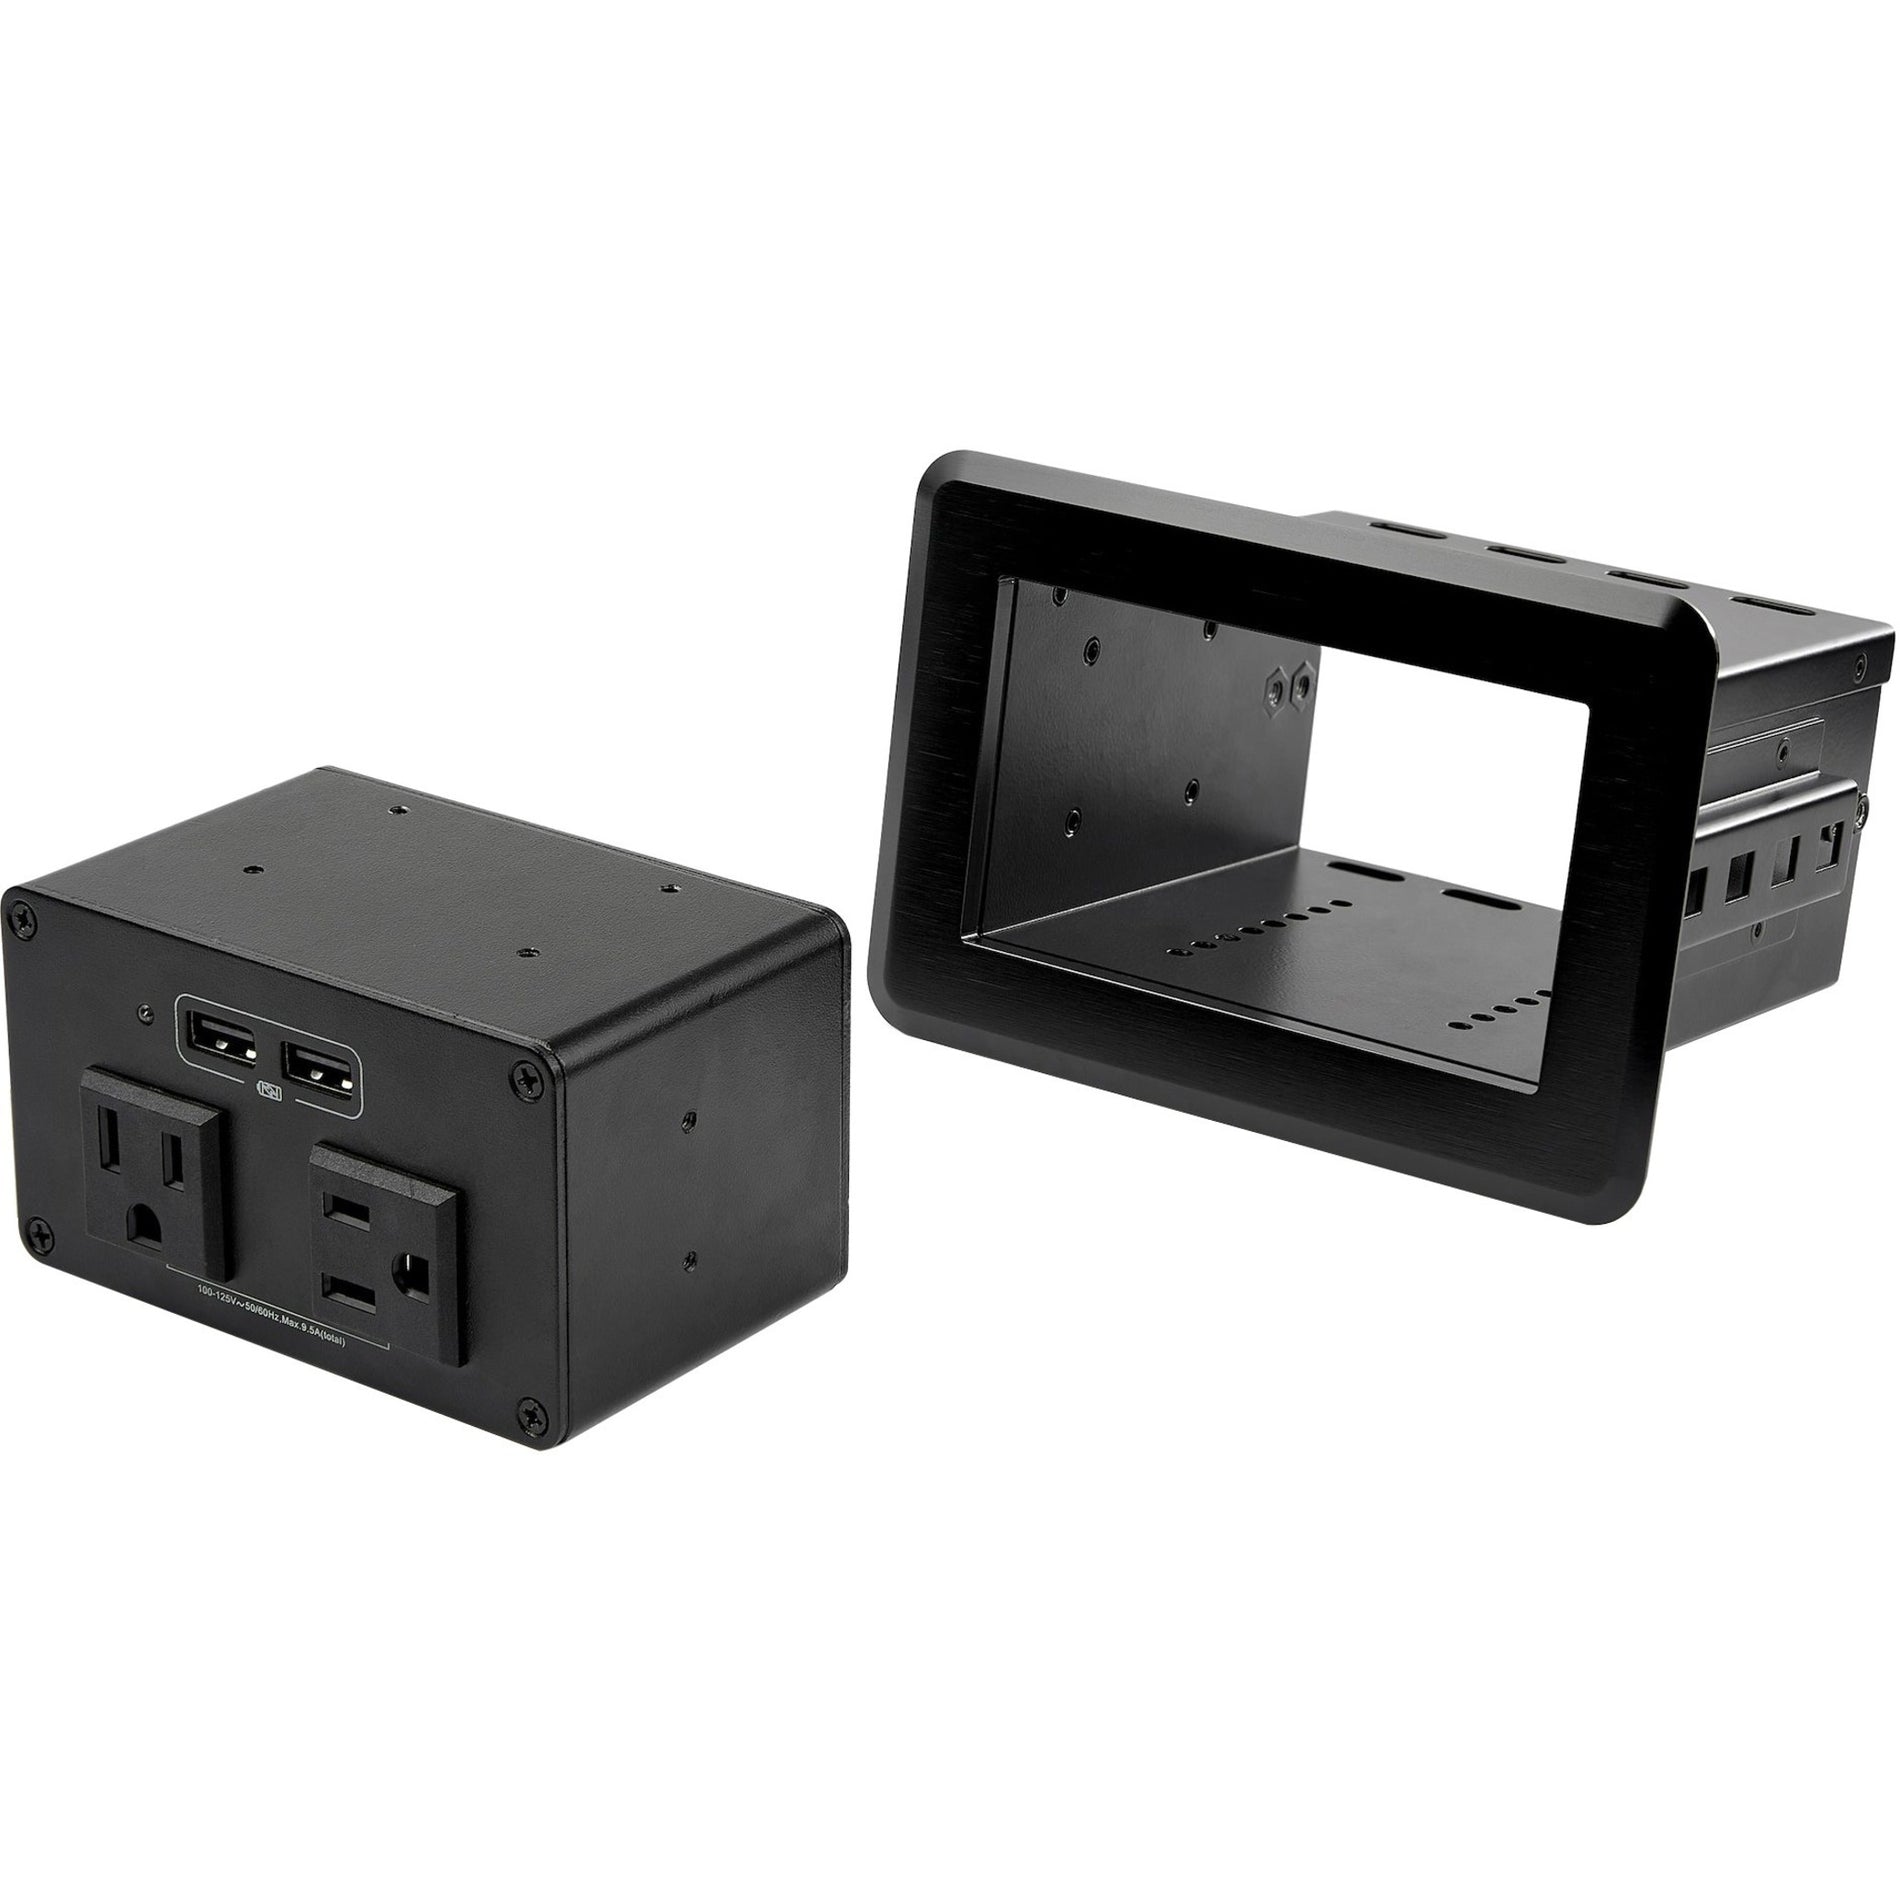 StarTech.com KITBZPOWNA Power Outlet, 2 USB Ports, 4 Receptacles, Tabletop/Desk Mountable, Black